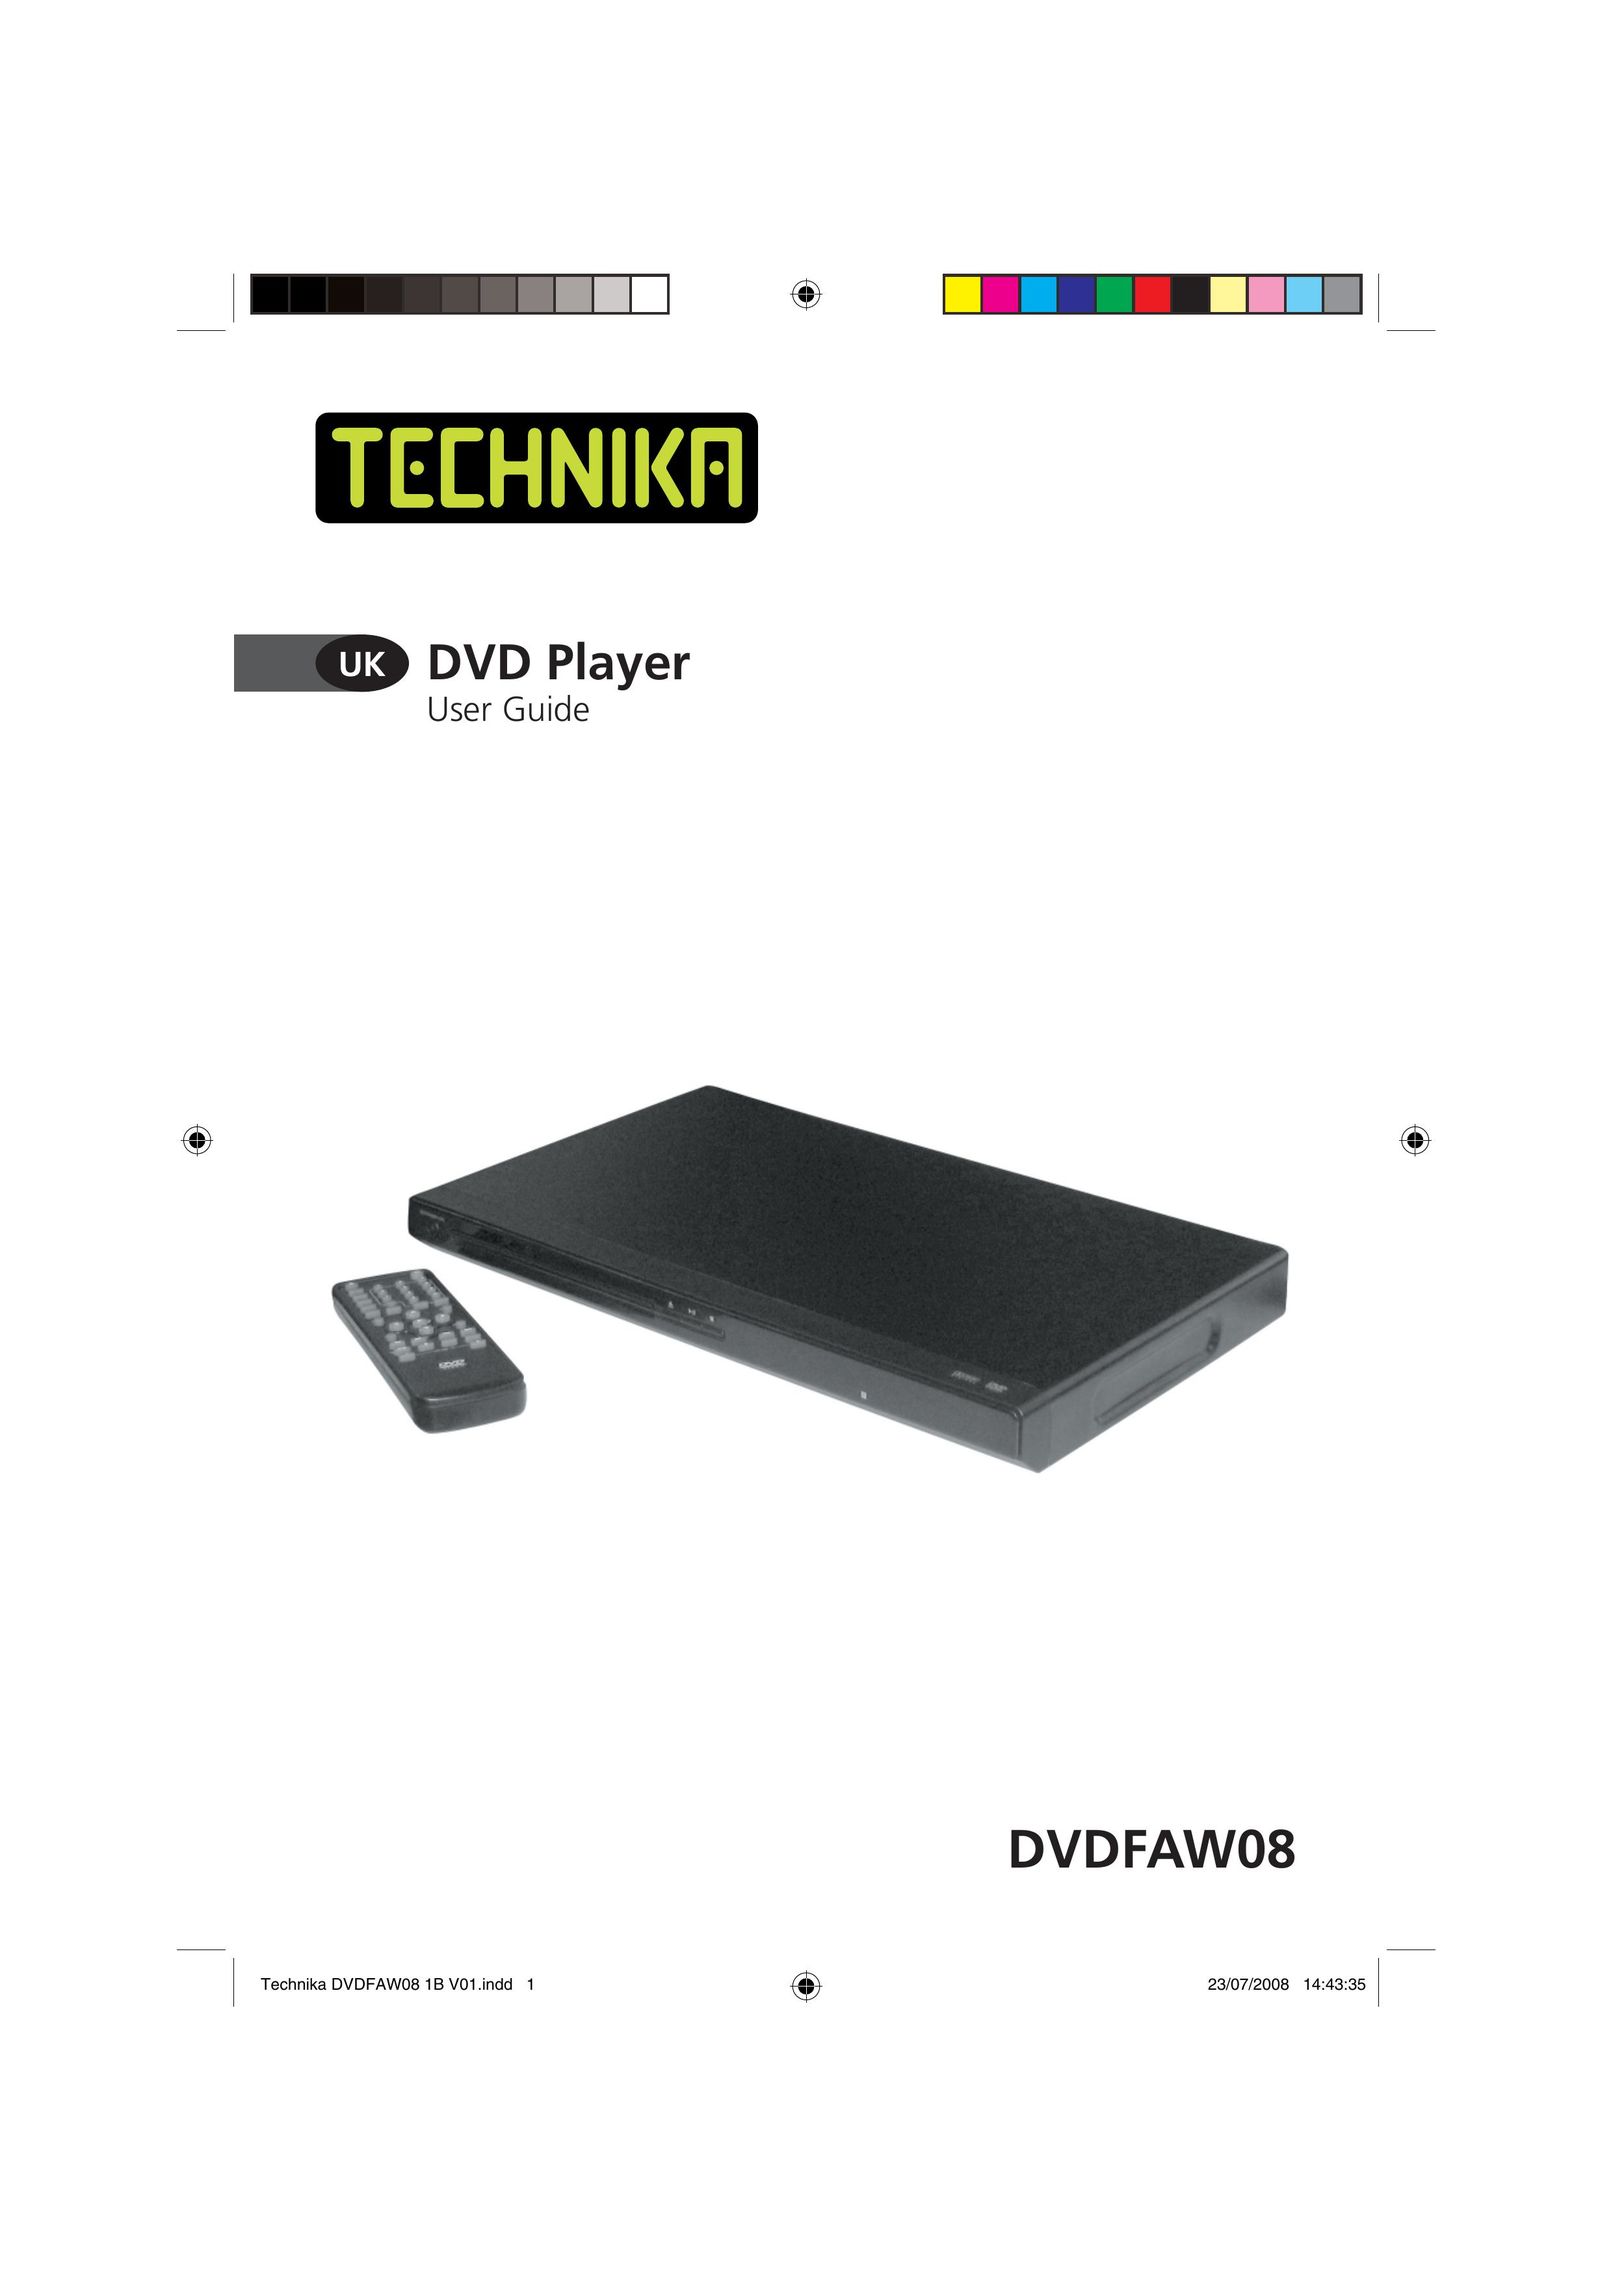 Technika DVDFAW08 DVD Player User Manual